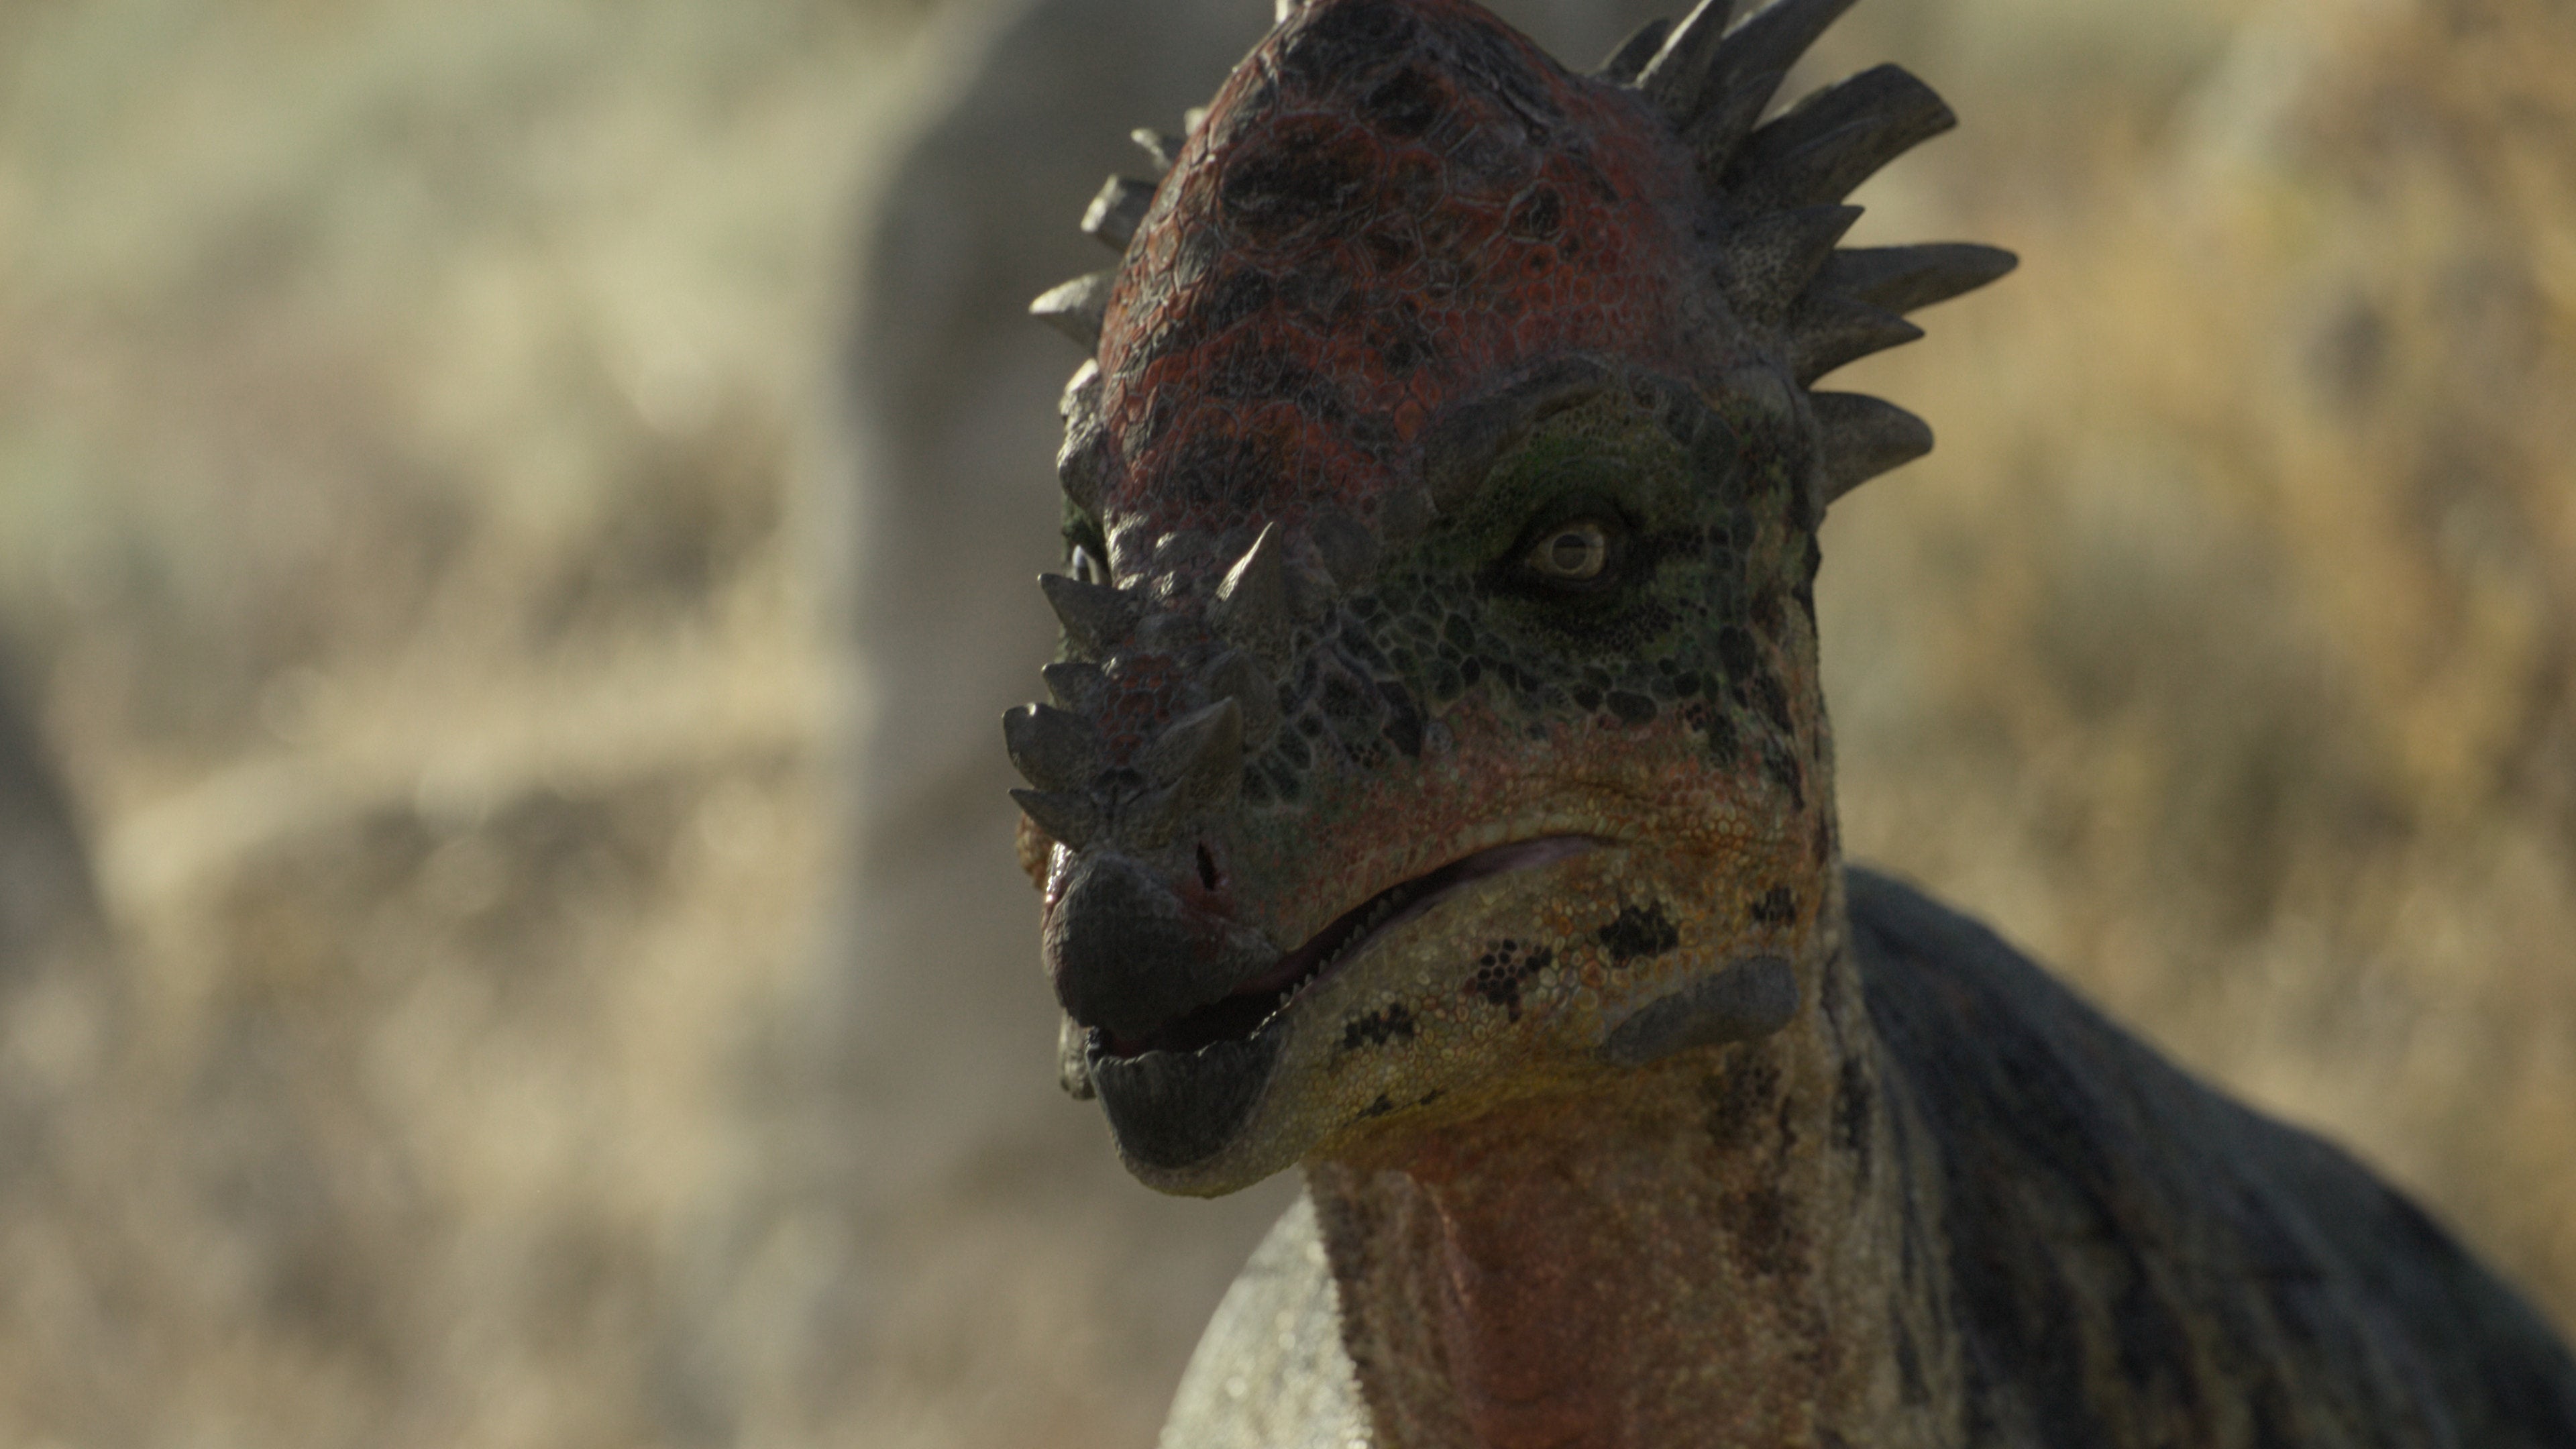 A Pachycephalosaurus close-up from the latest season of Prehistoric Planet. (Image: Apple TV+)